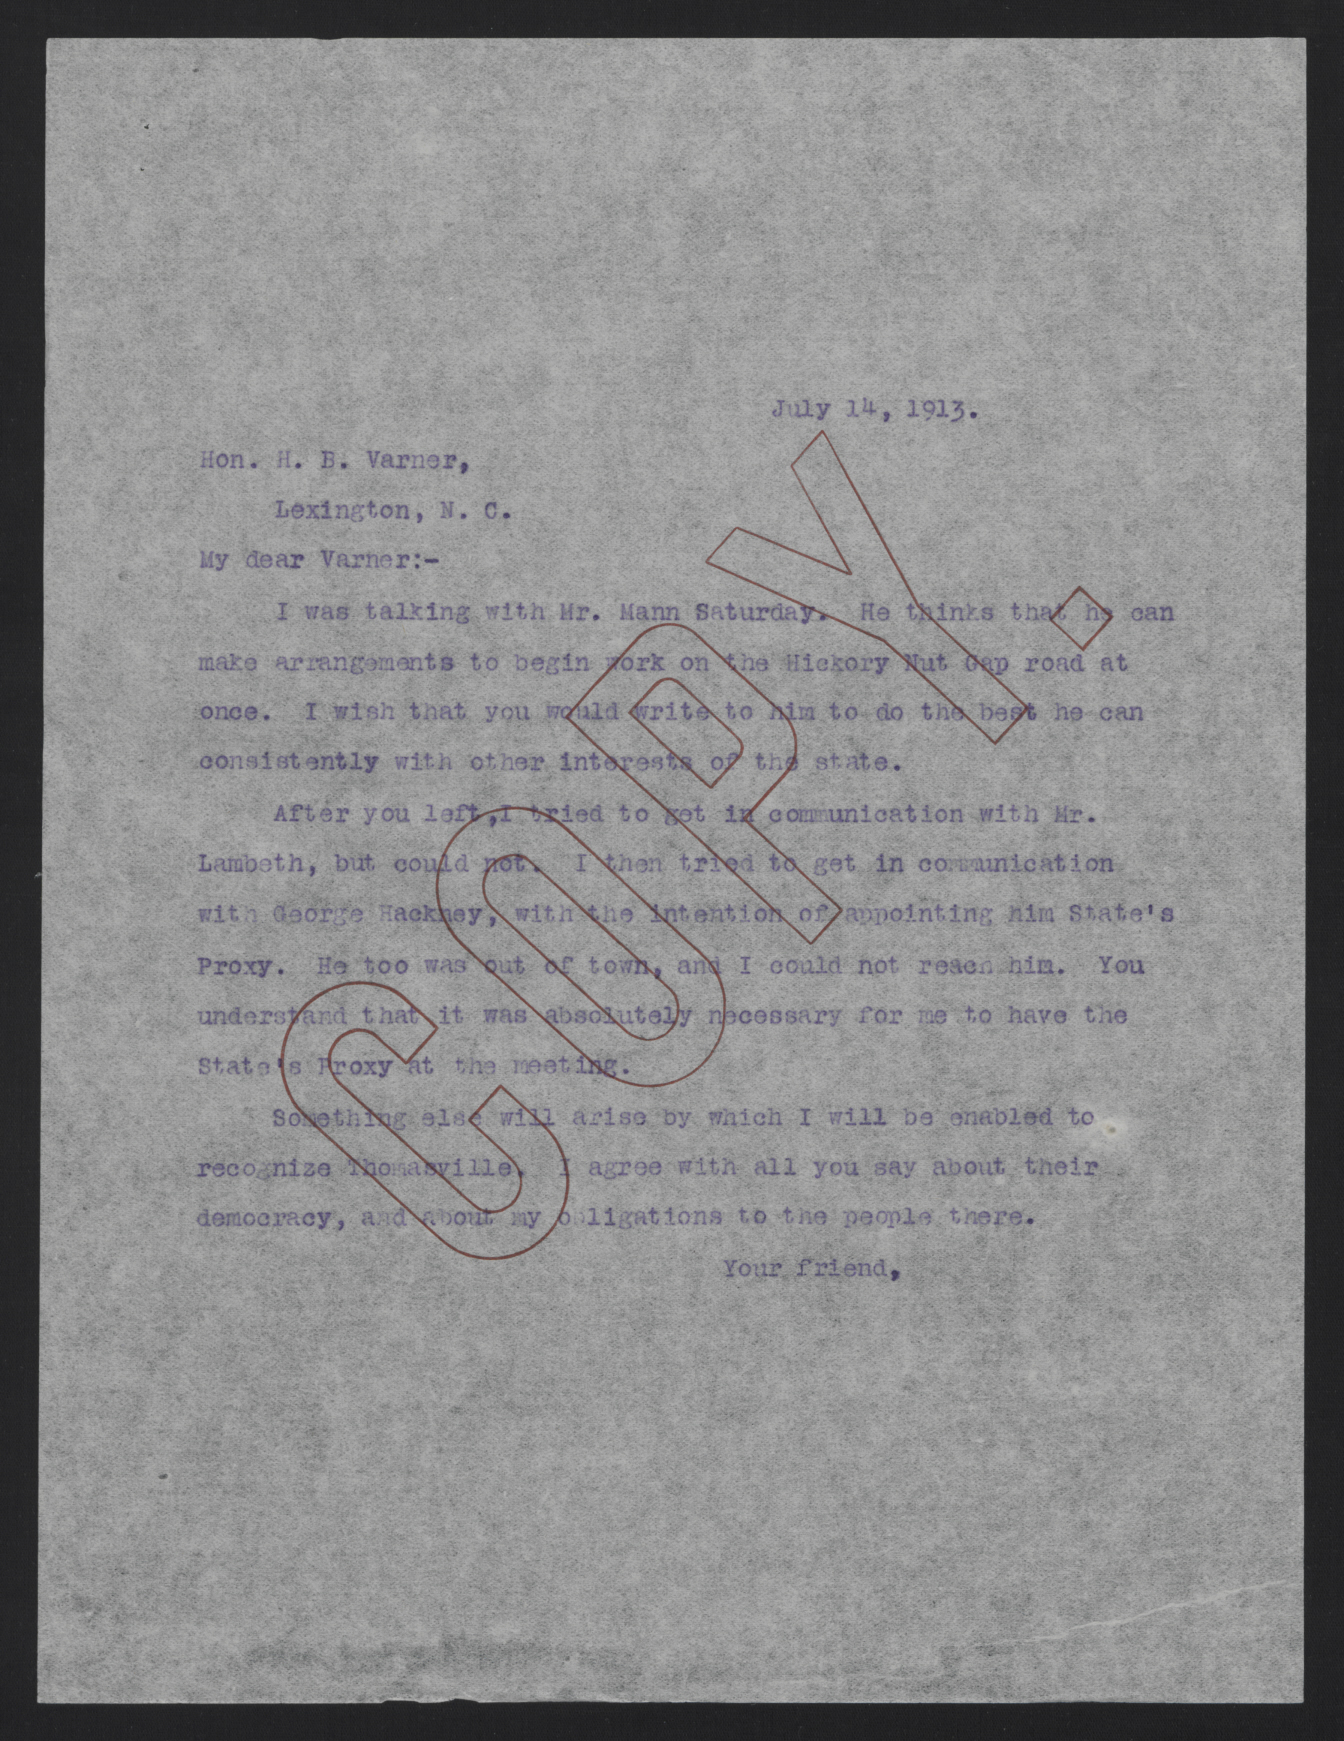 Letter from Craig to Varner, July 14, 1913